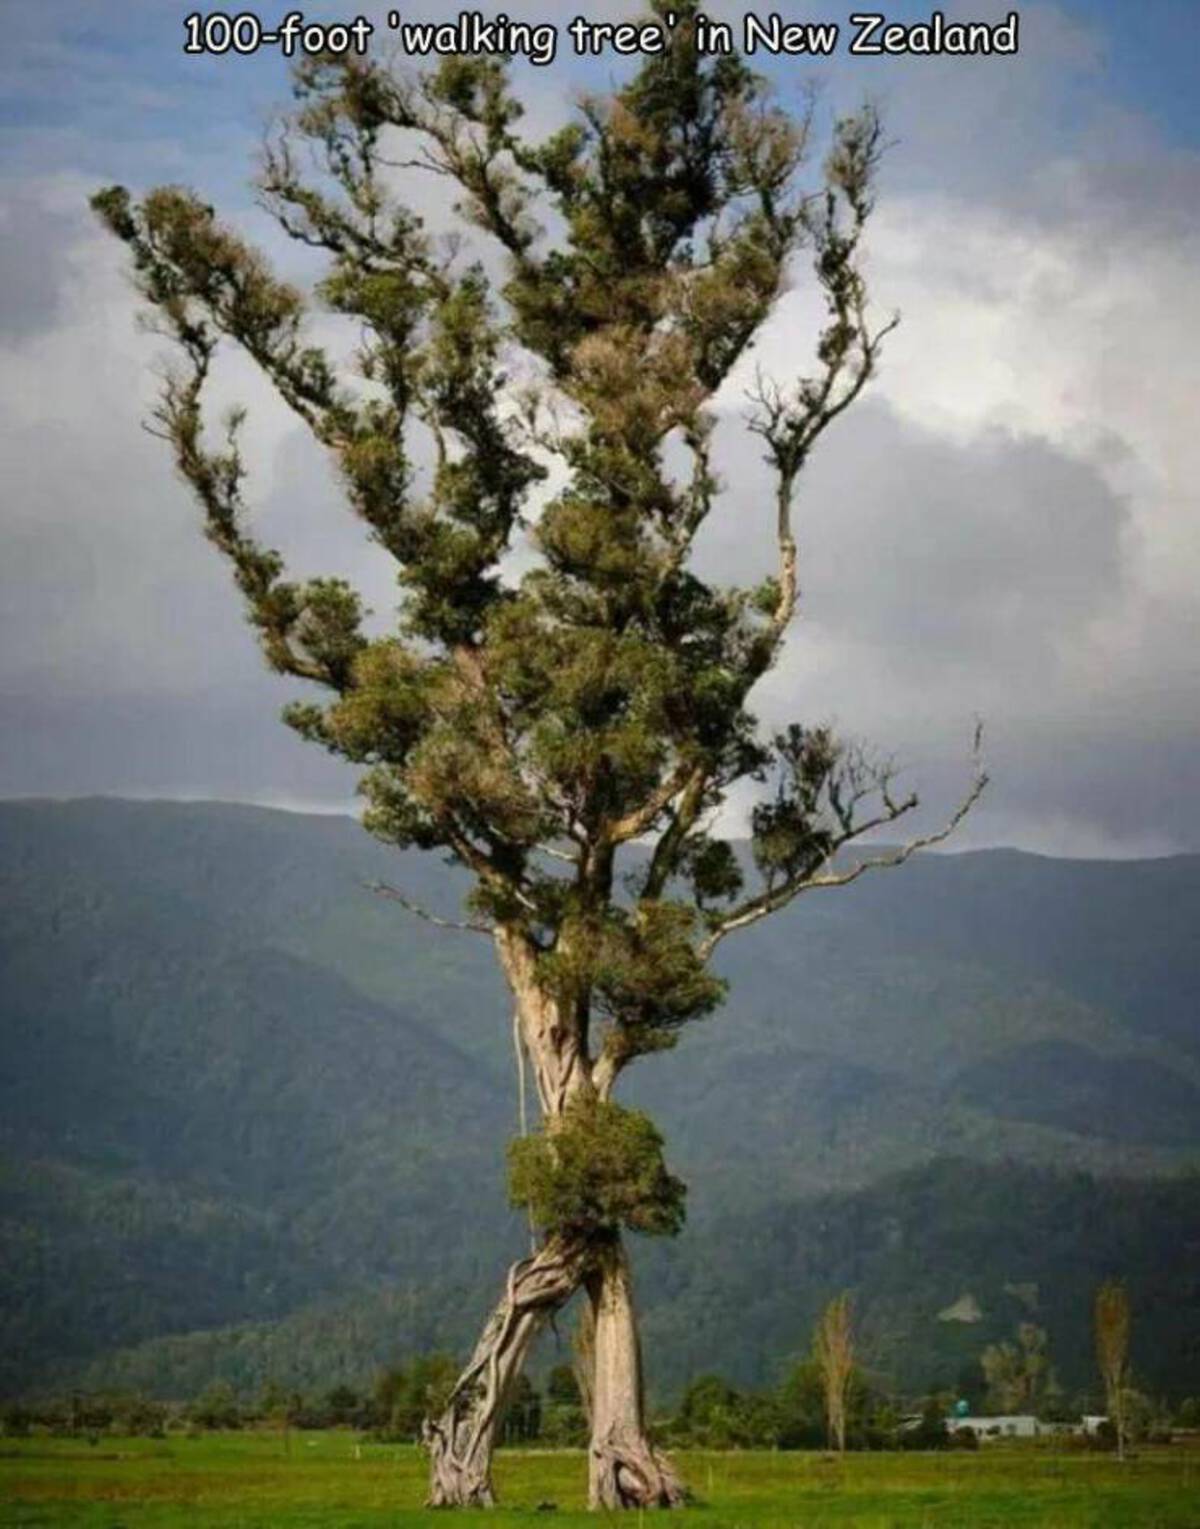 tree of the year nz - 100foot 'walking tree' in New Zealand